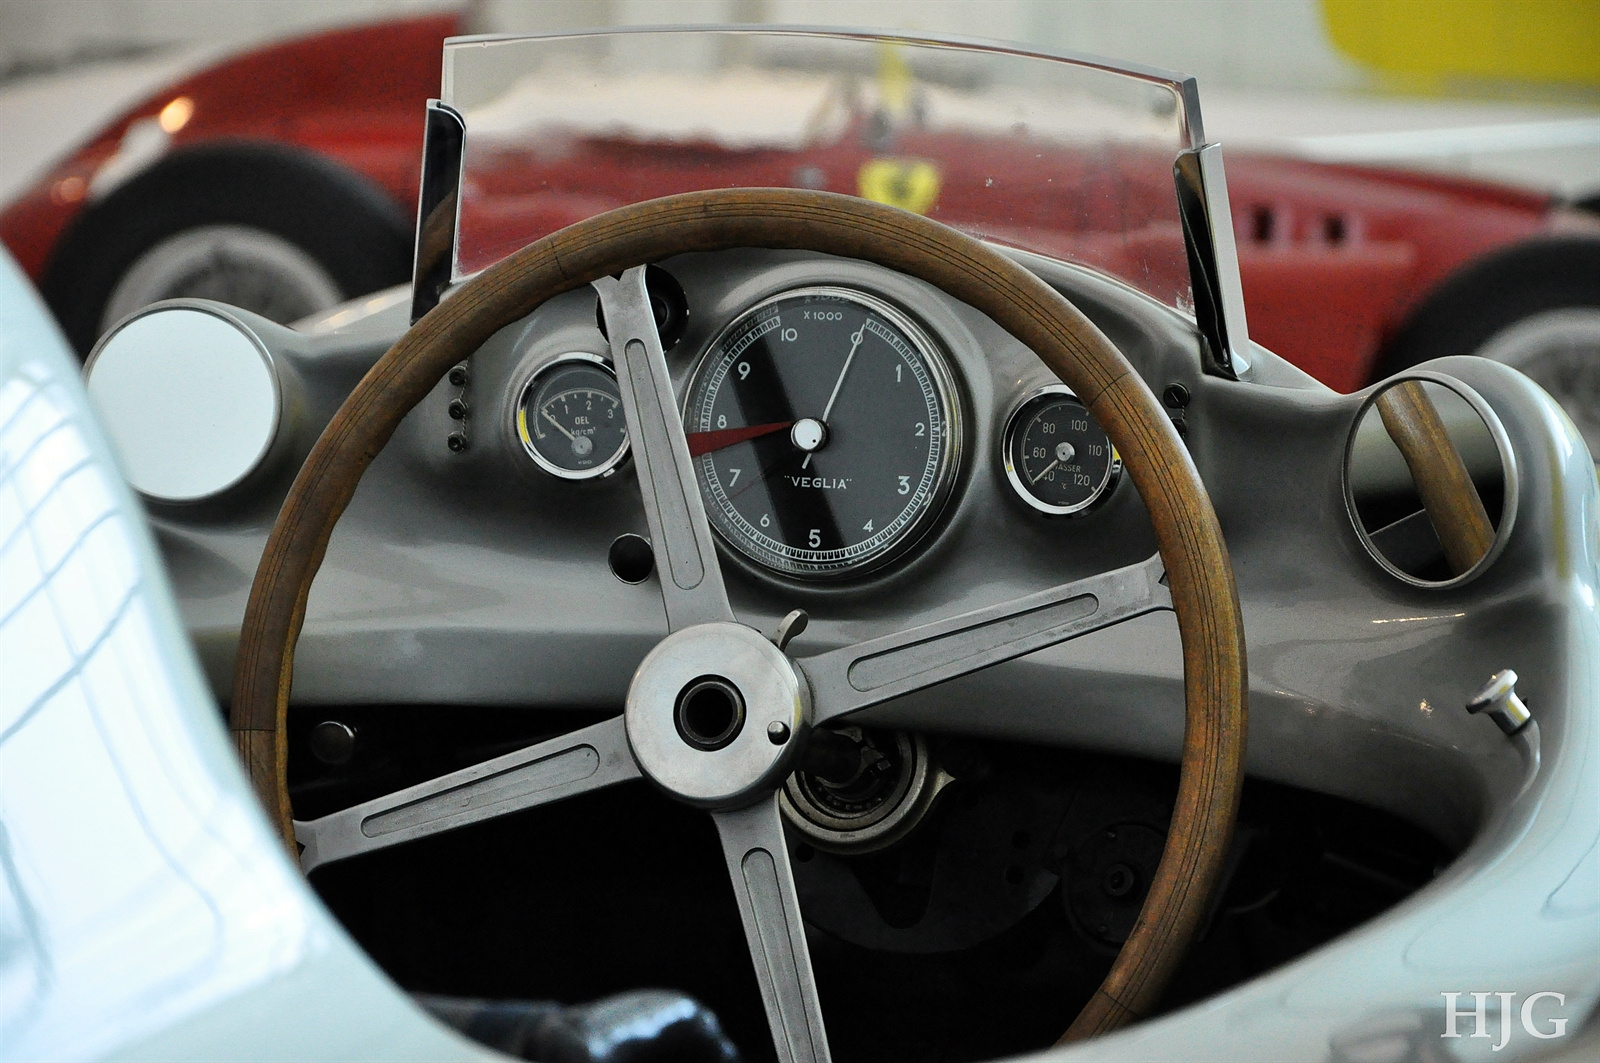 Mercedes-Benz W196 cockpit